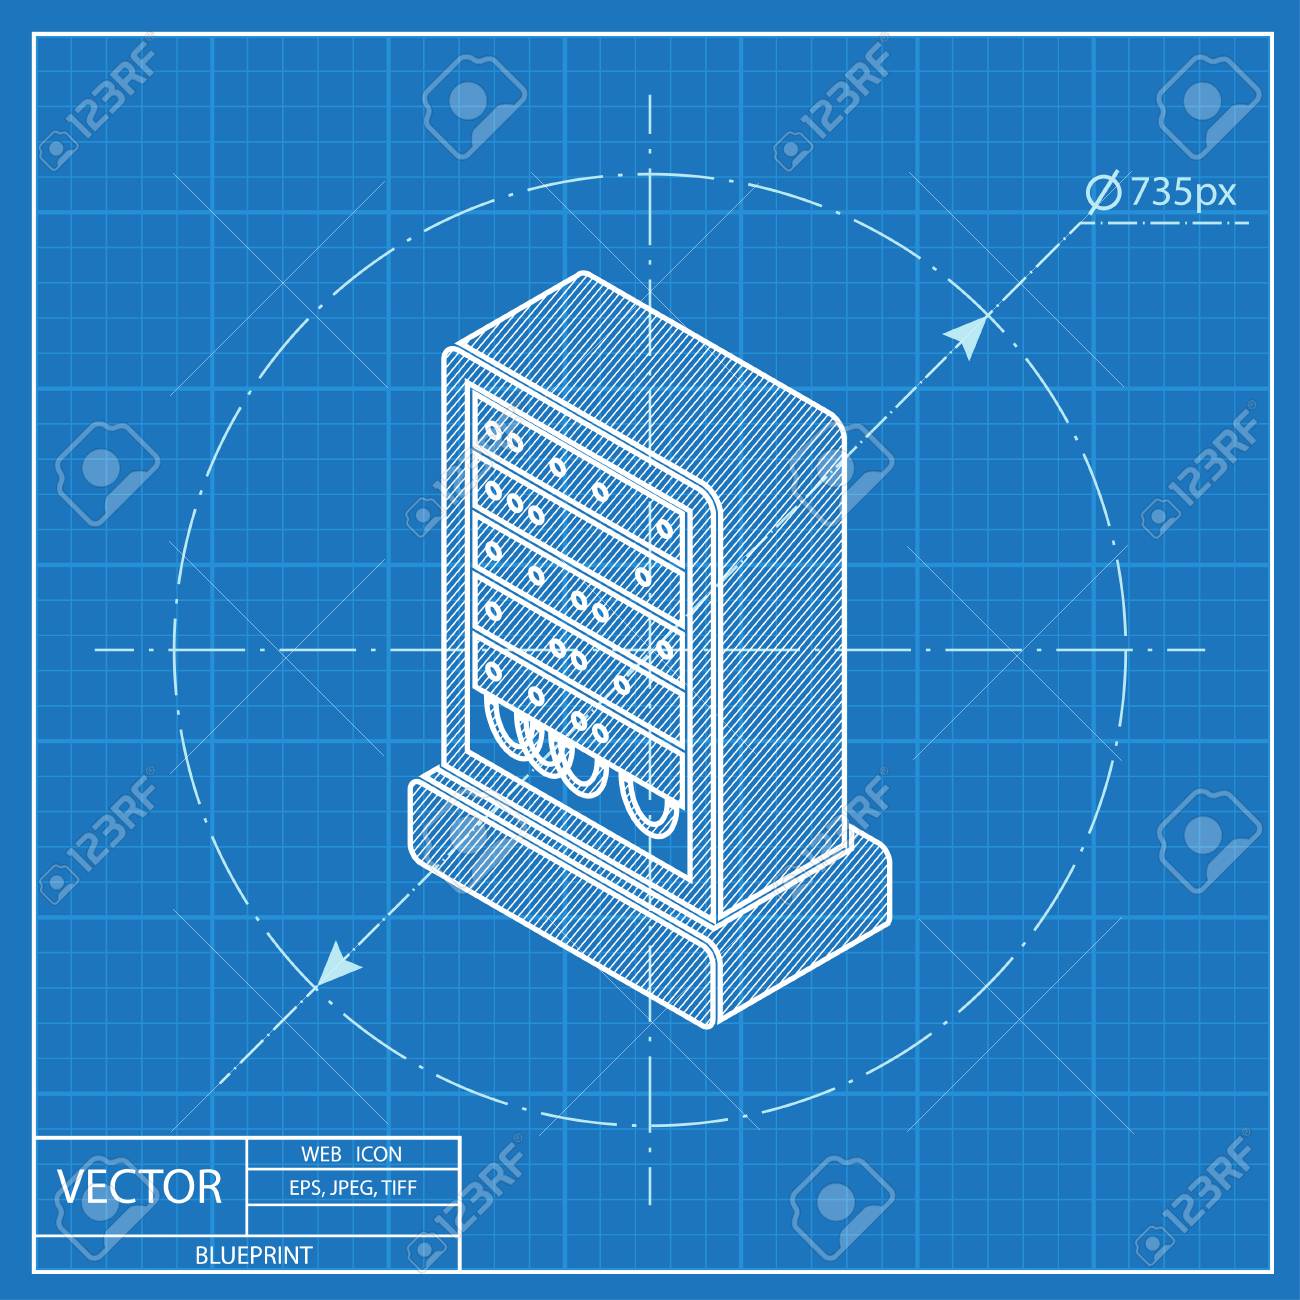 54116542-server-isometric-3d-blueprint-icon.jpg